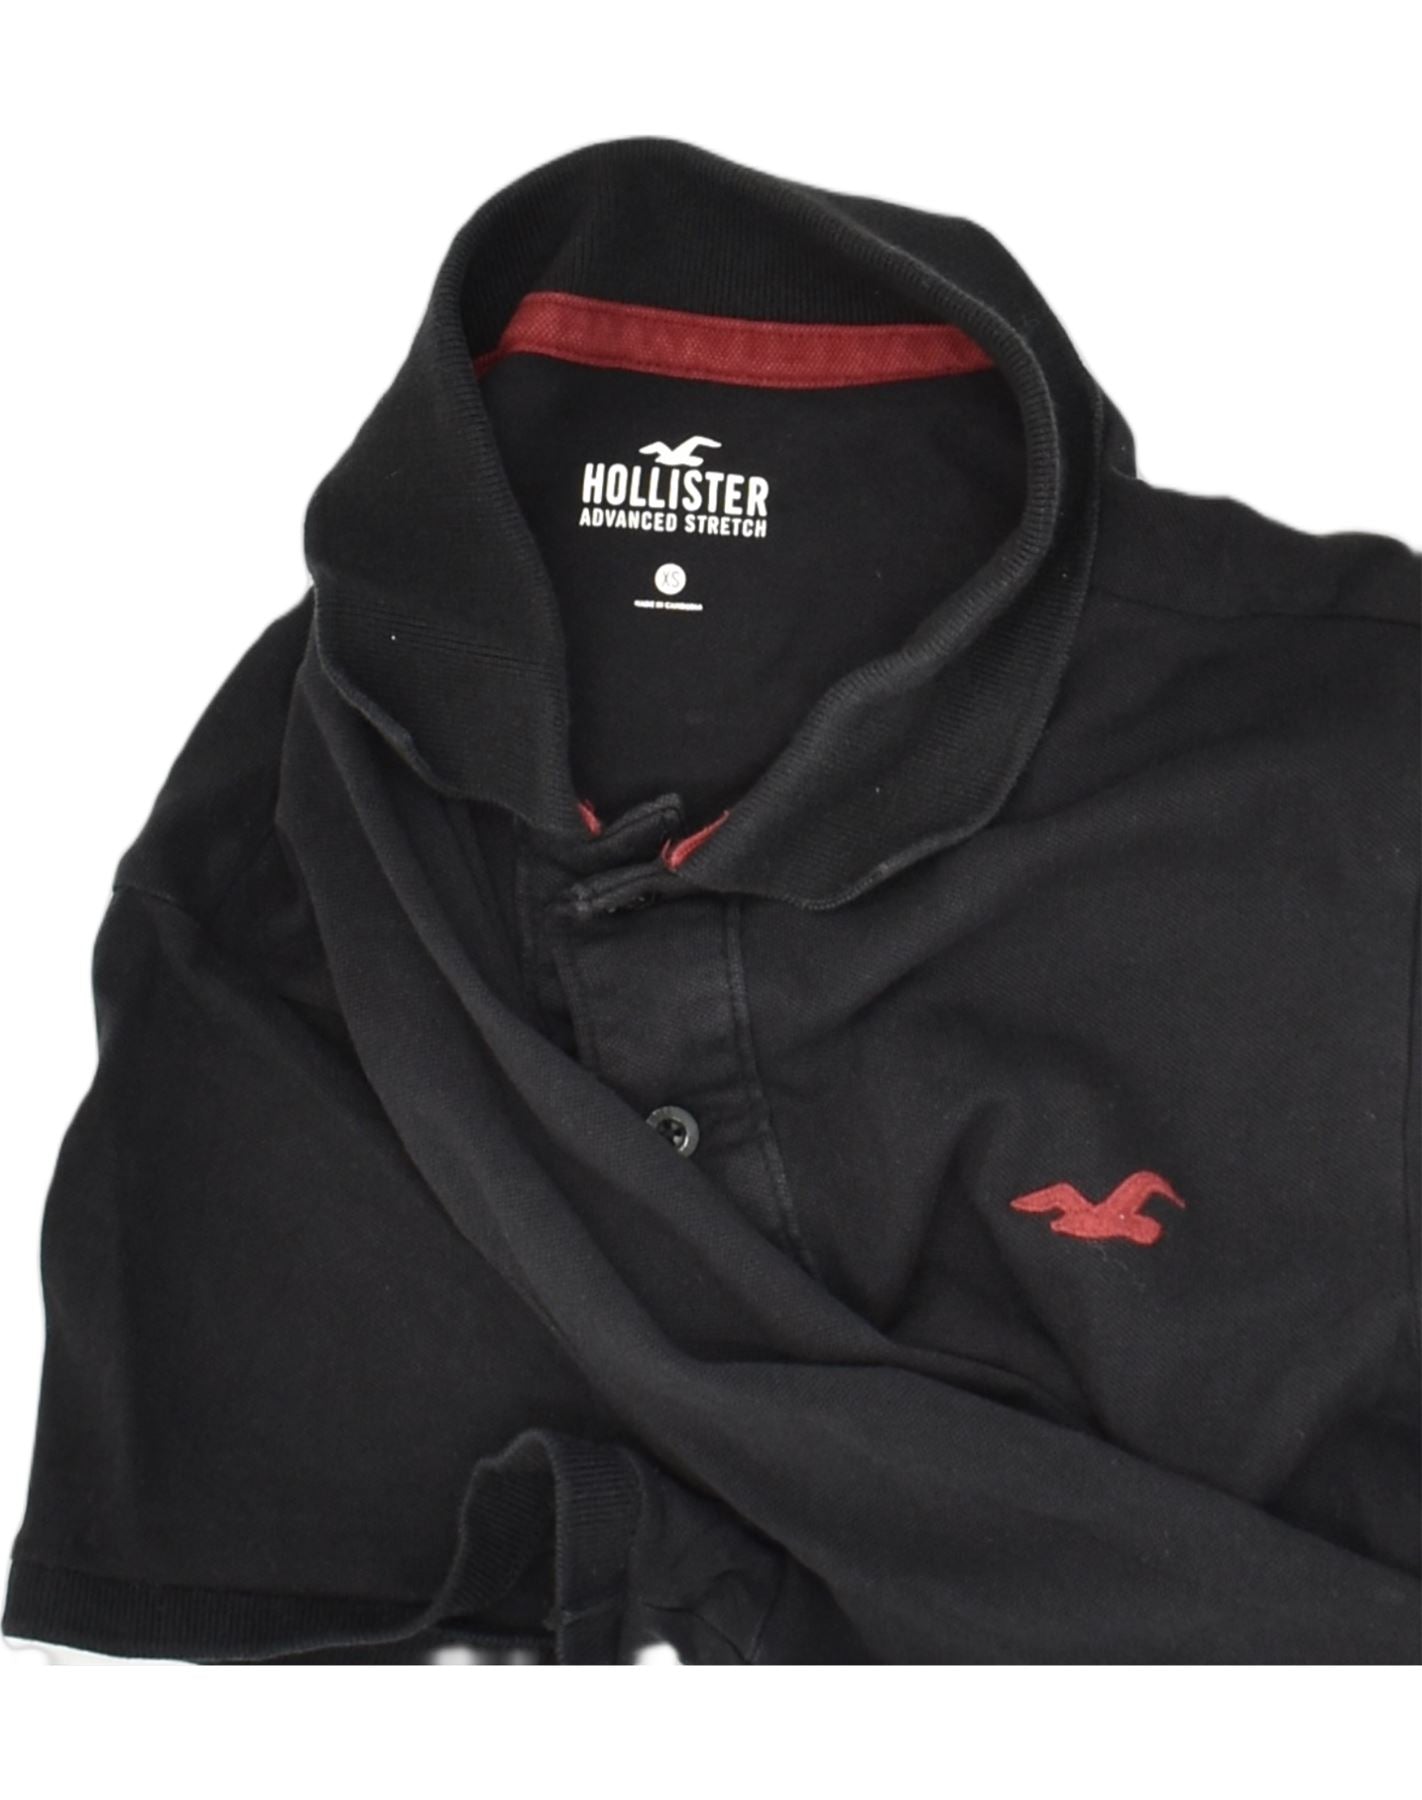 Hollister stretch black Shirt Neck Polo For Men: Buy Online at